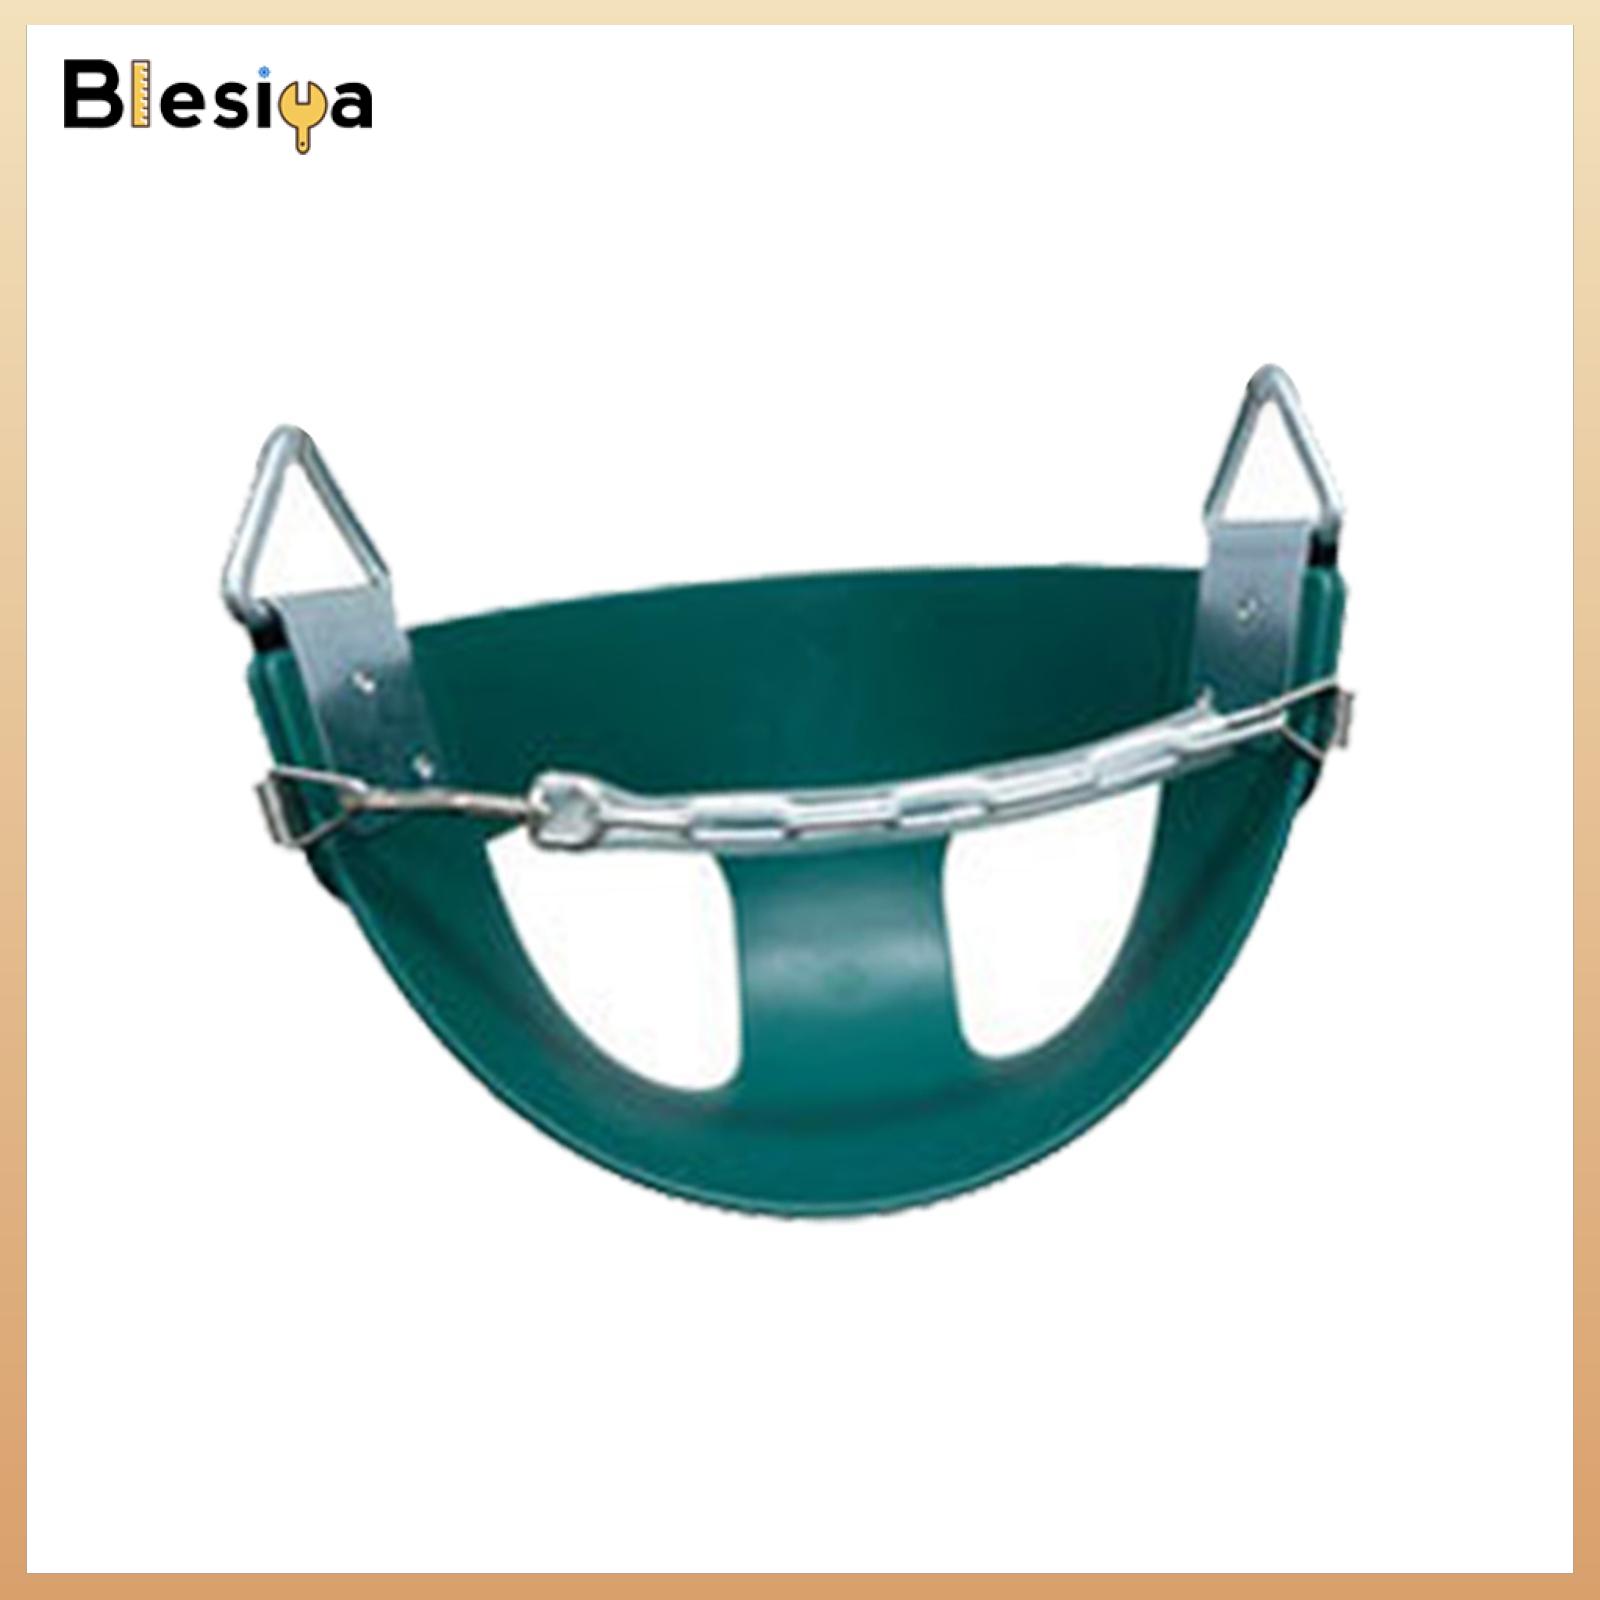 Blesiya Swing Seat Swing Sets Easy Install High Back Bucket for Hiking